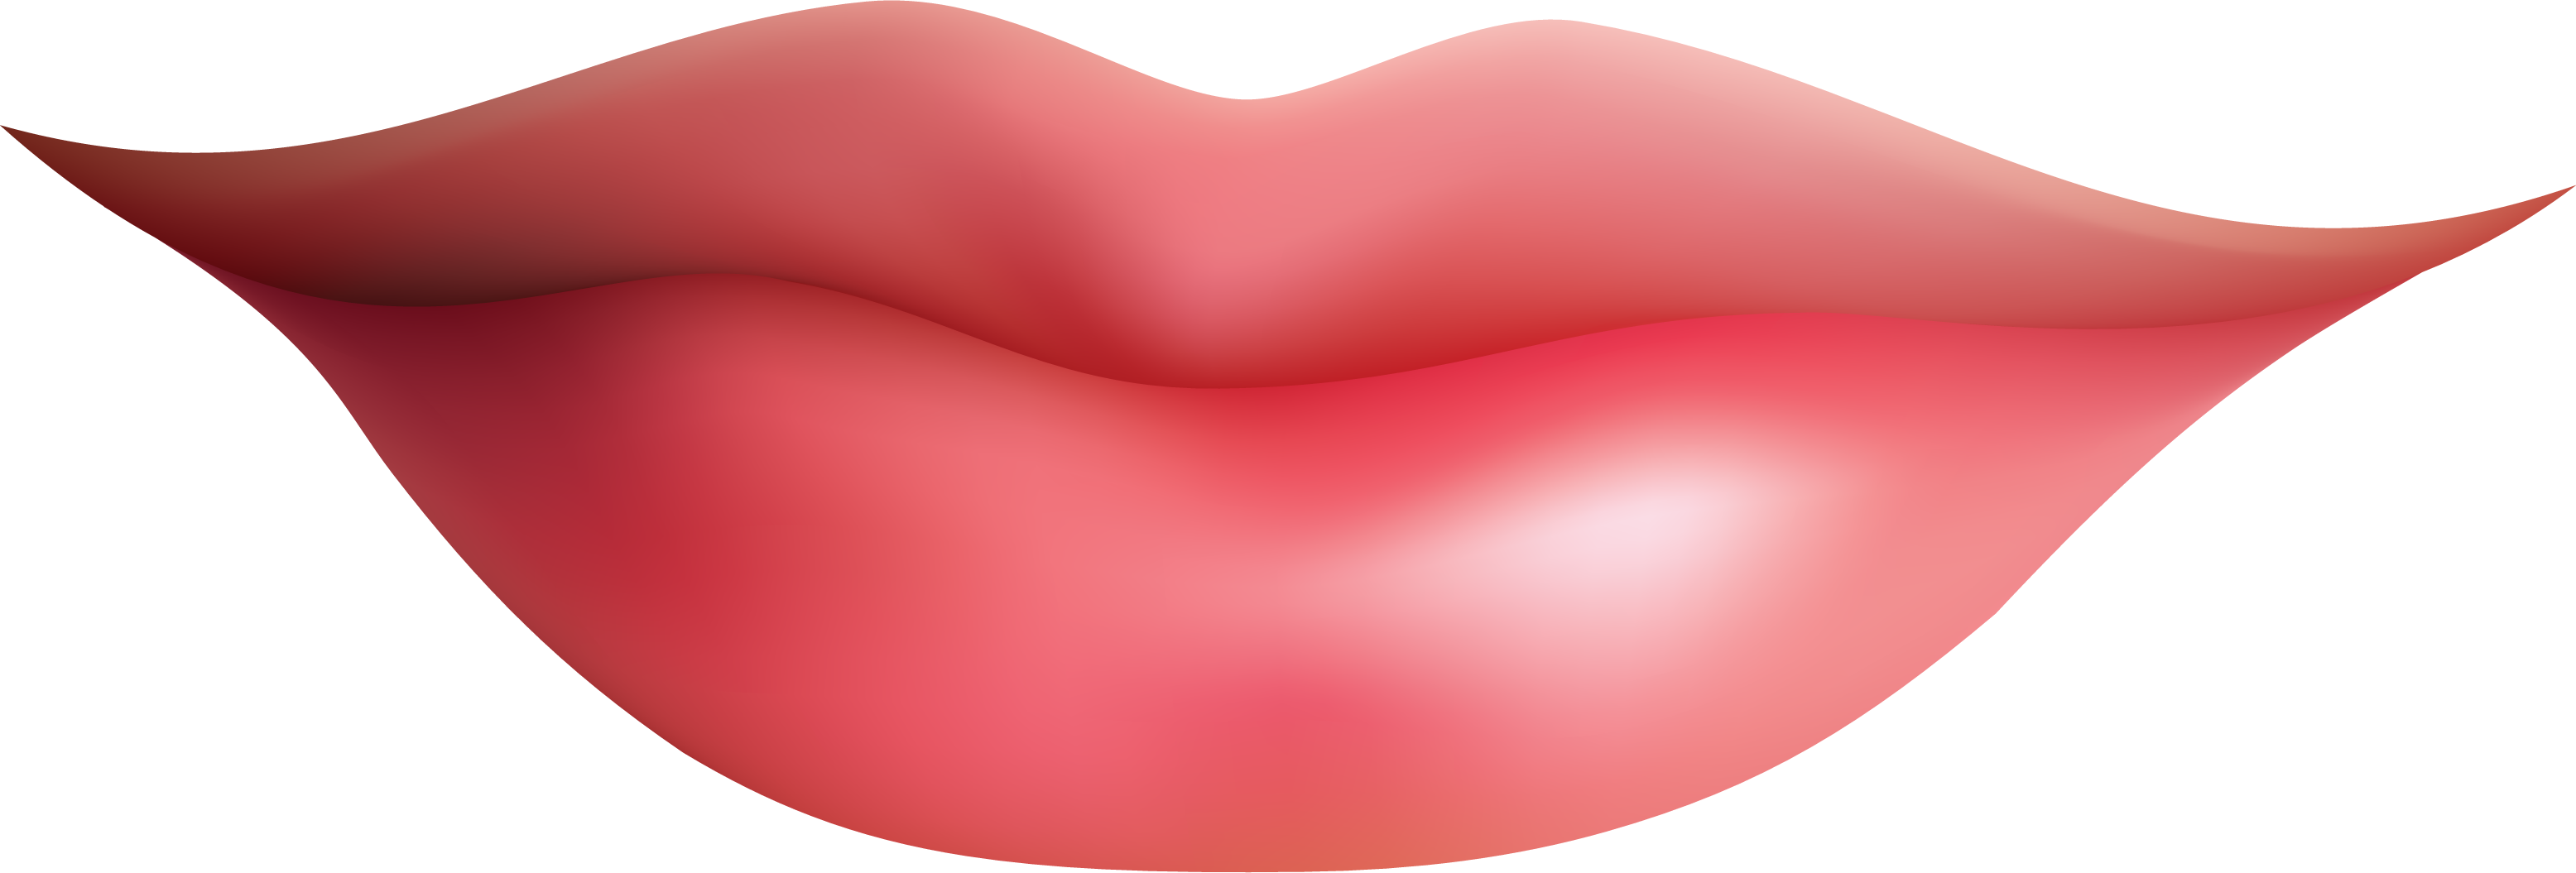 Lips clip art white clipart image